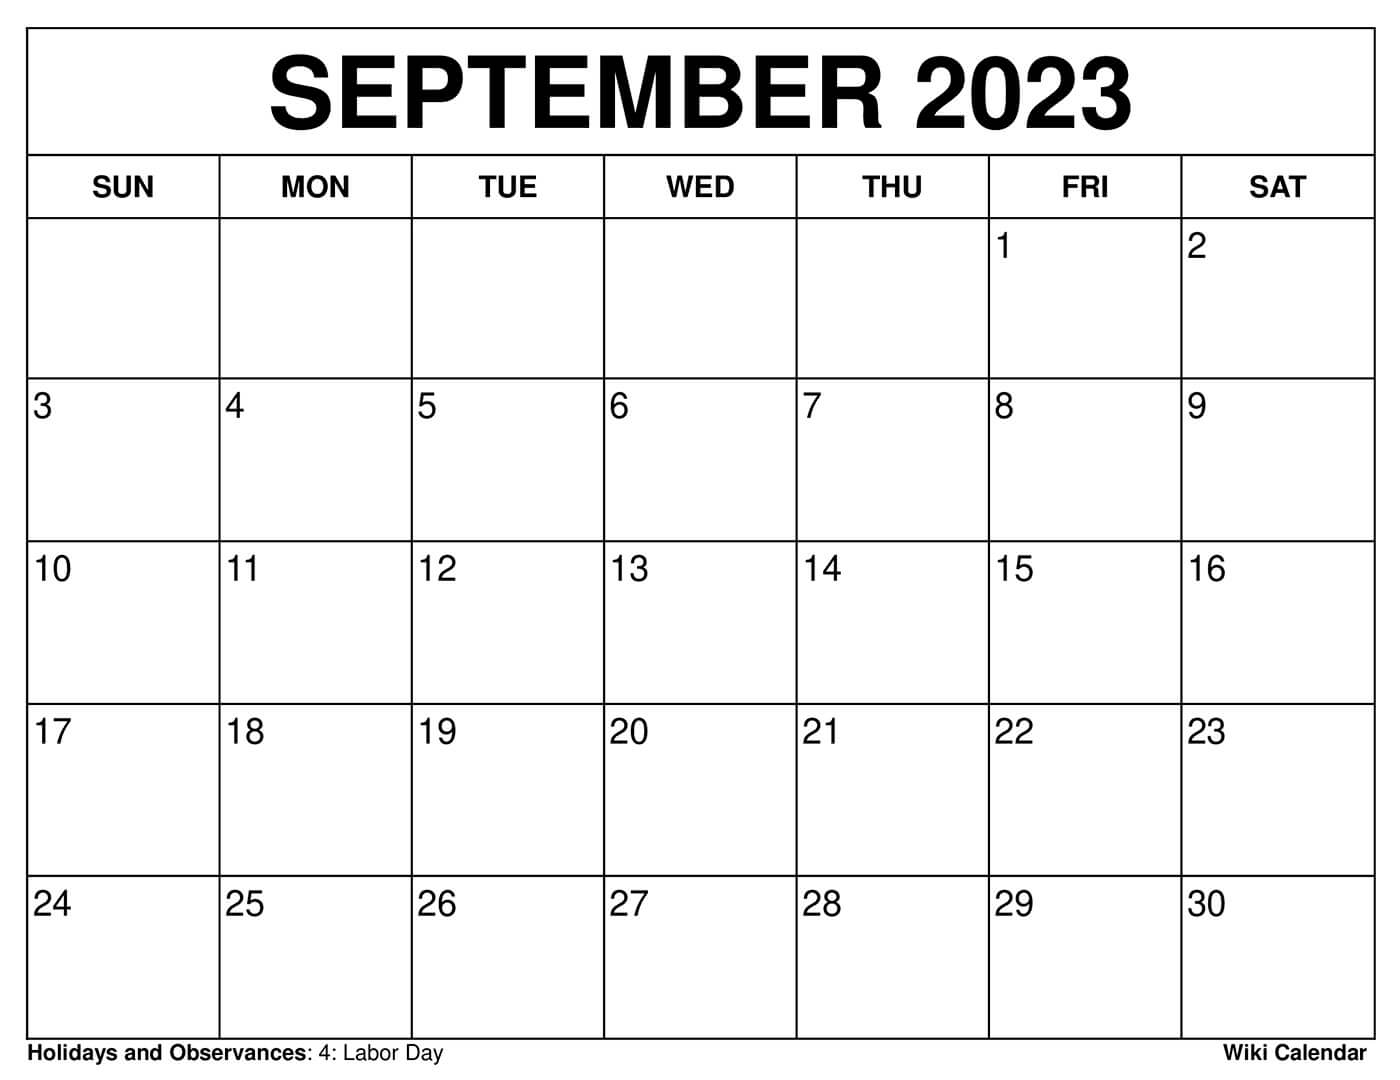 Free Printable Calendar September 2022 Free Printable September 2022 Calendars - Wiki Calendar